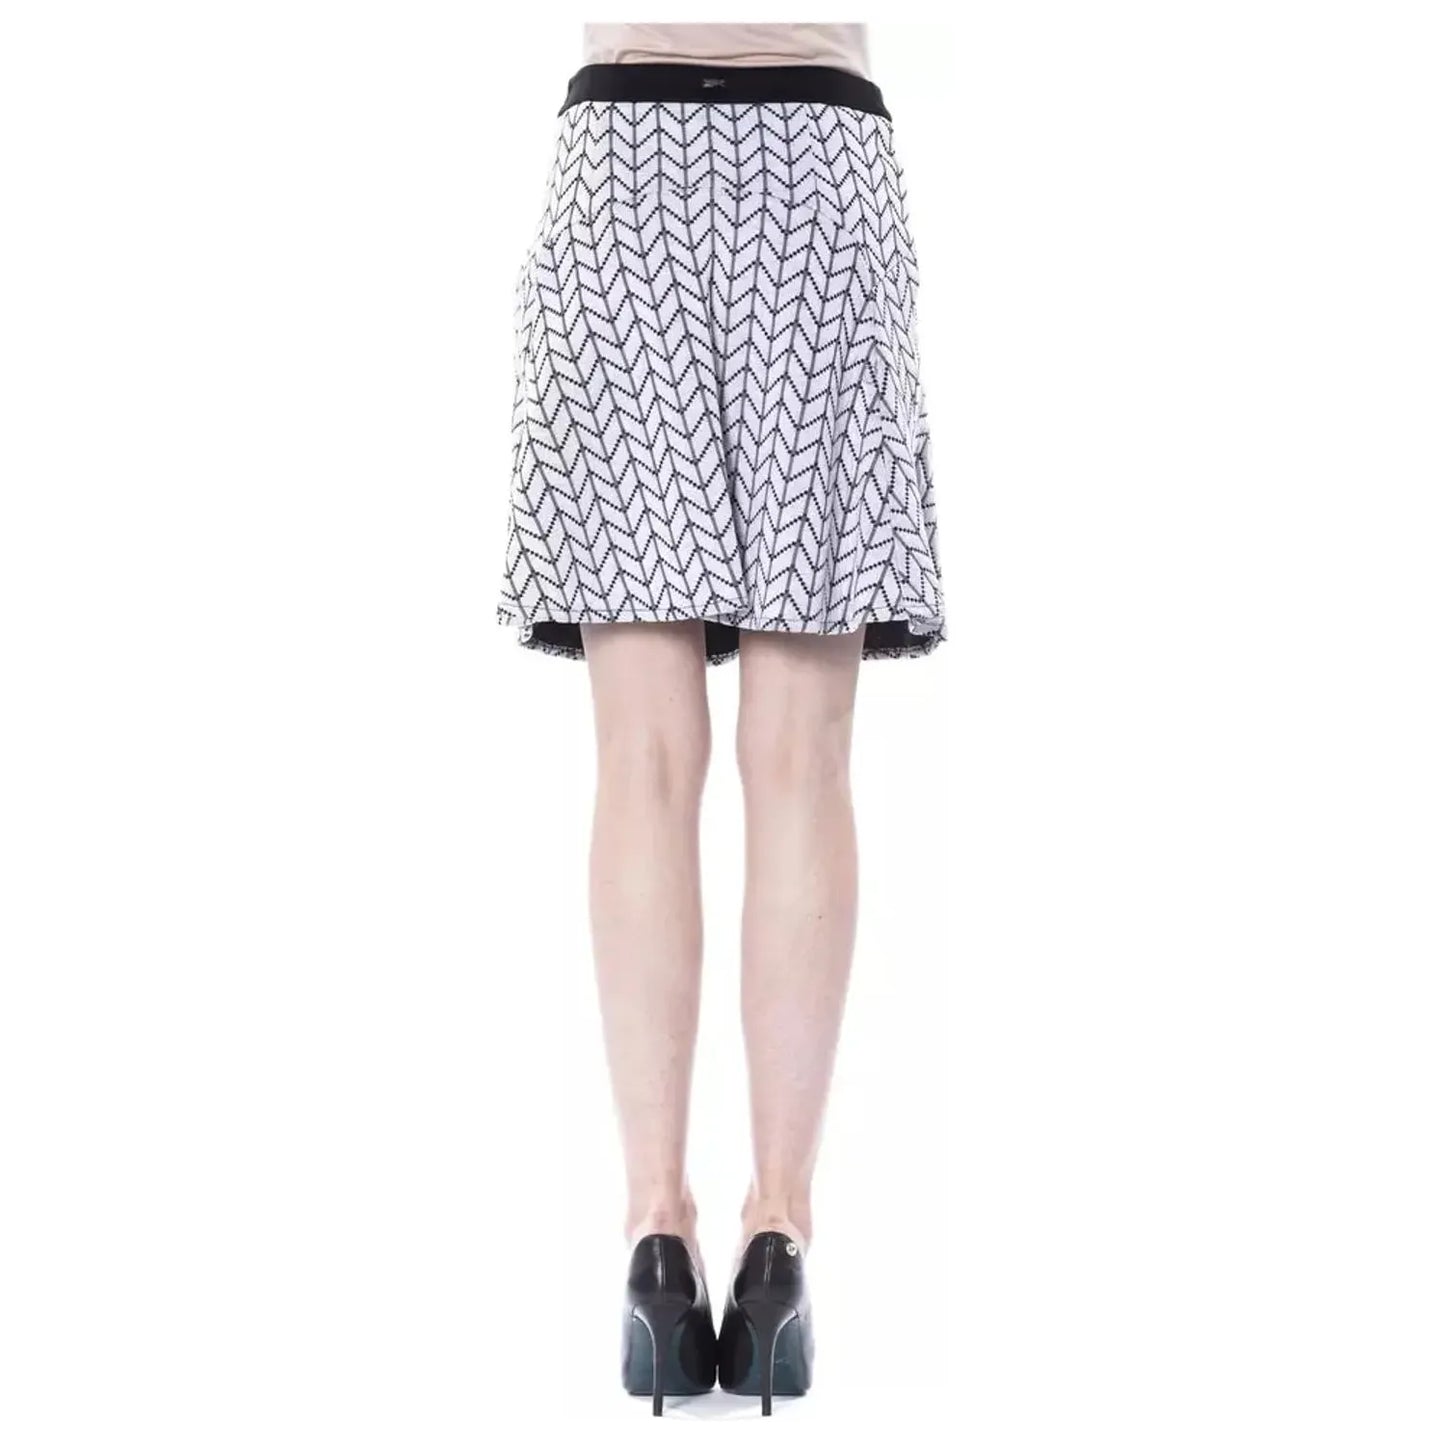 BYBLOS Chic Black and White Tube Short Skirt WOMAN SKIRTS black-white-acrylic-skirt